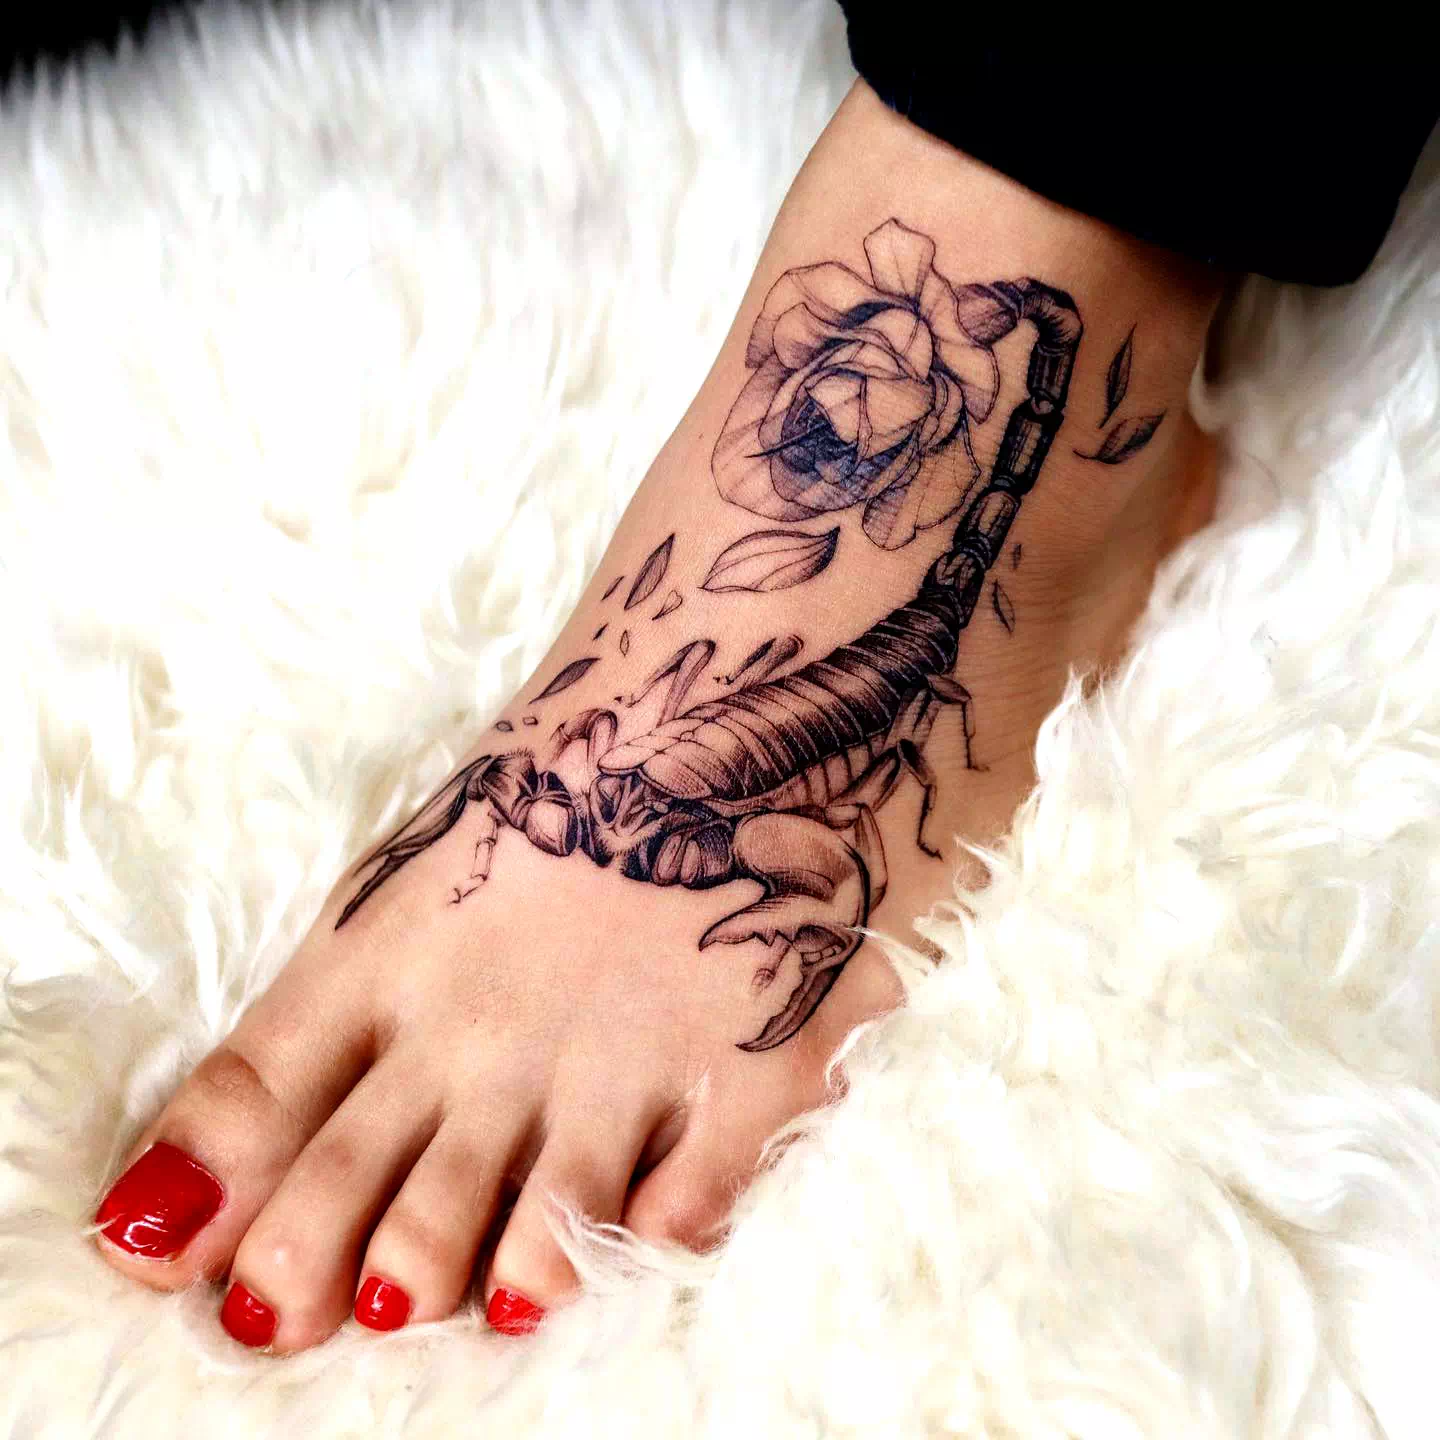 Feminine Scorpio Tattoos With A Rose Print